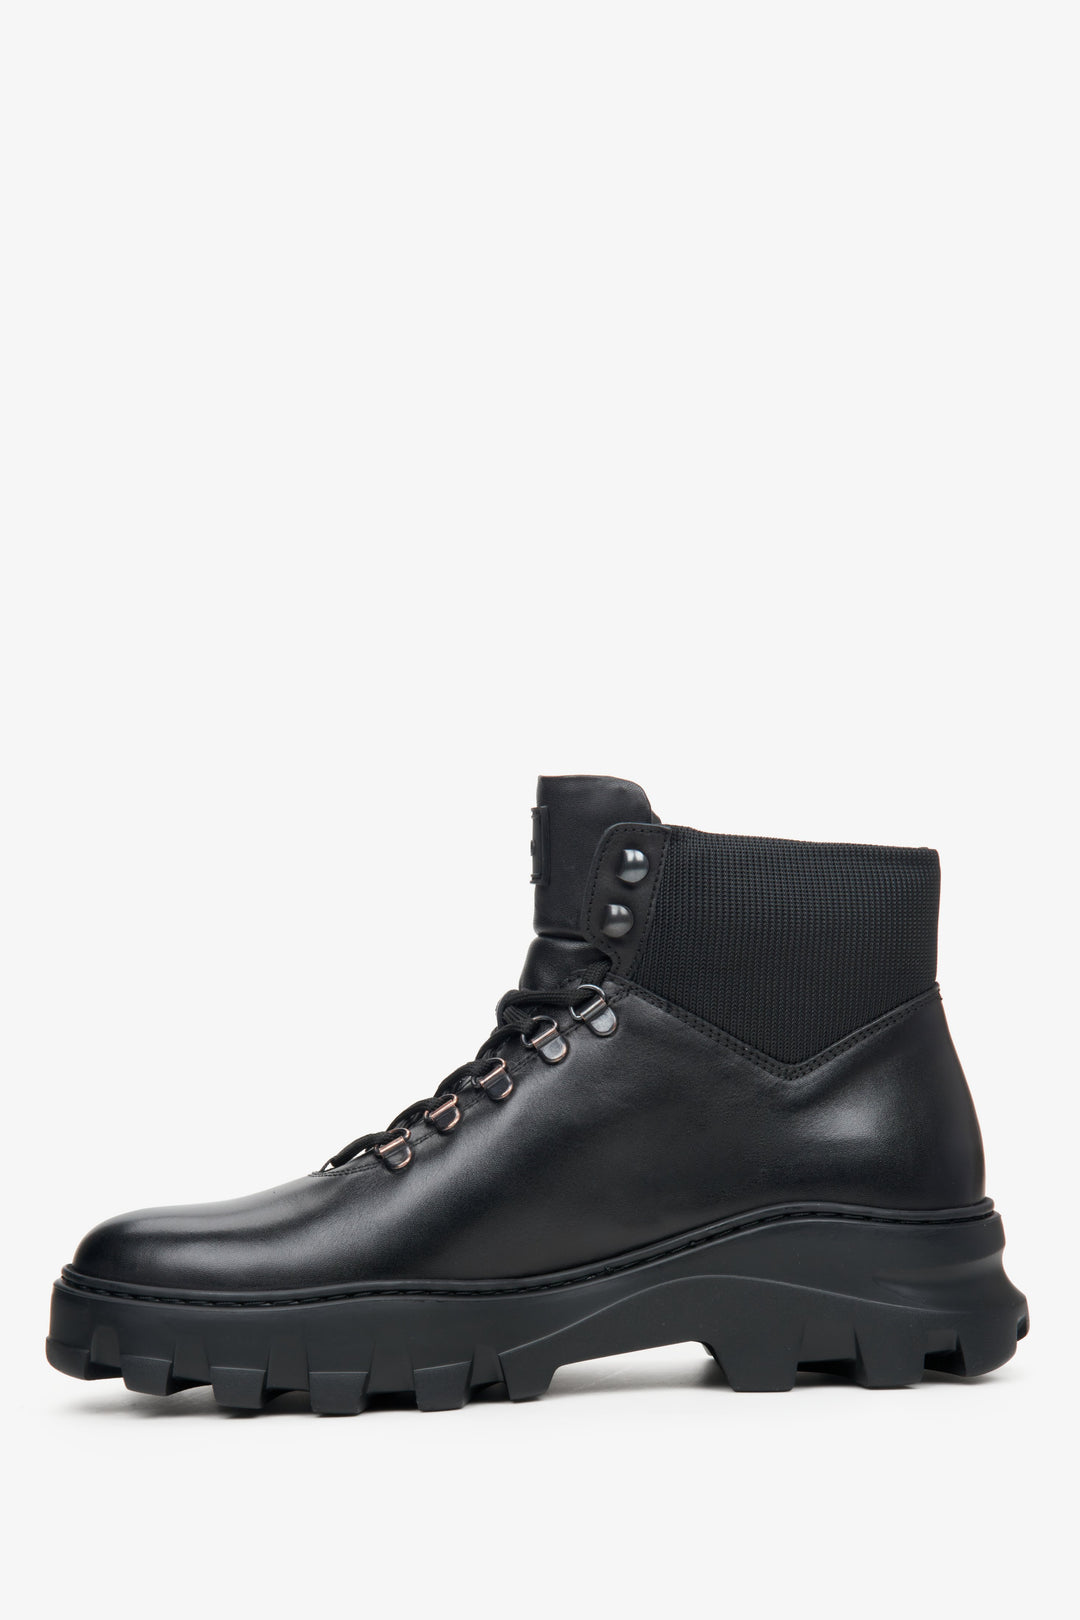 Men's black Estro boots made of genuine leather - shoe profile.